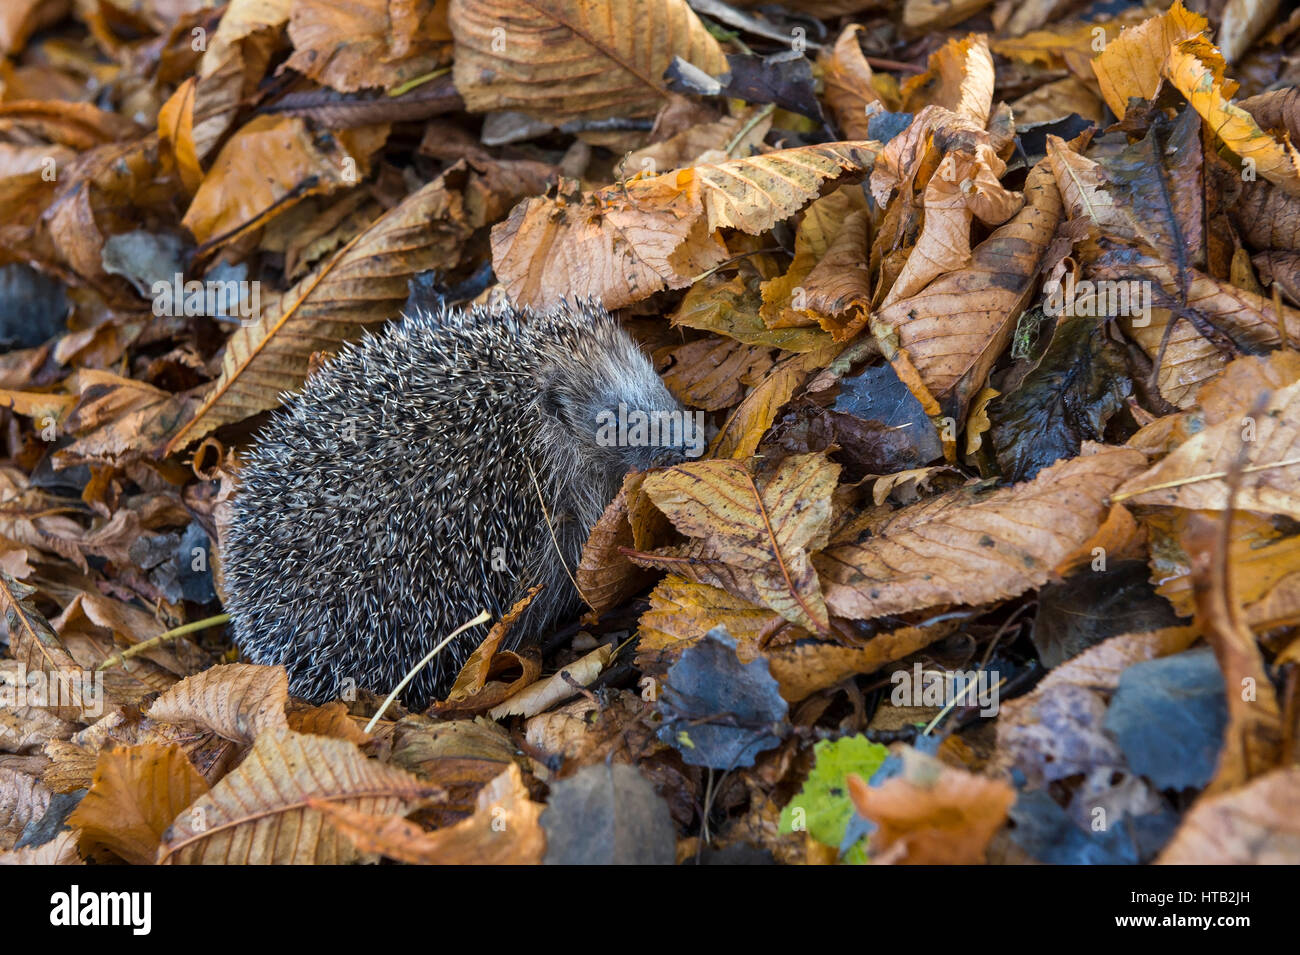 European hedgehog, autumn foliage, Erinaceidae, hedgehog in autumn, Europaeischer Igel, Herbstlaub, , Igel im Herbst Stock Photo